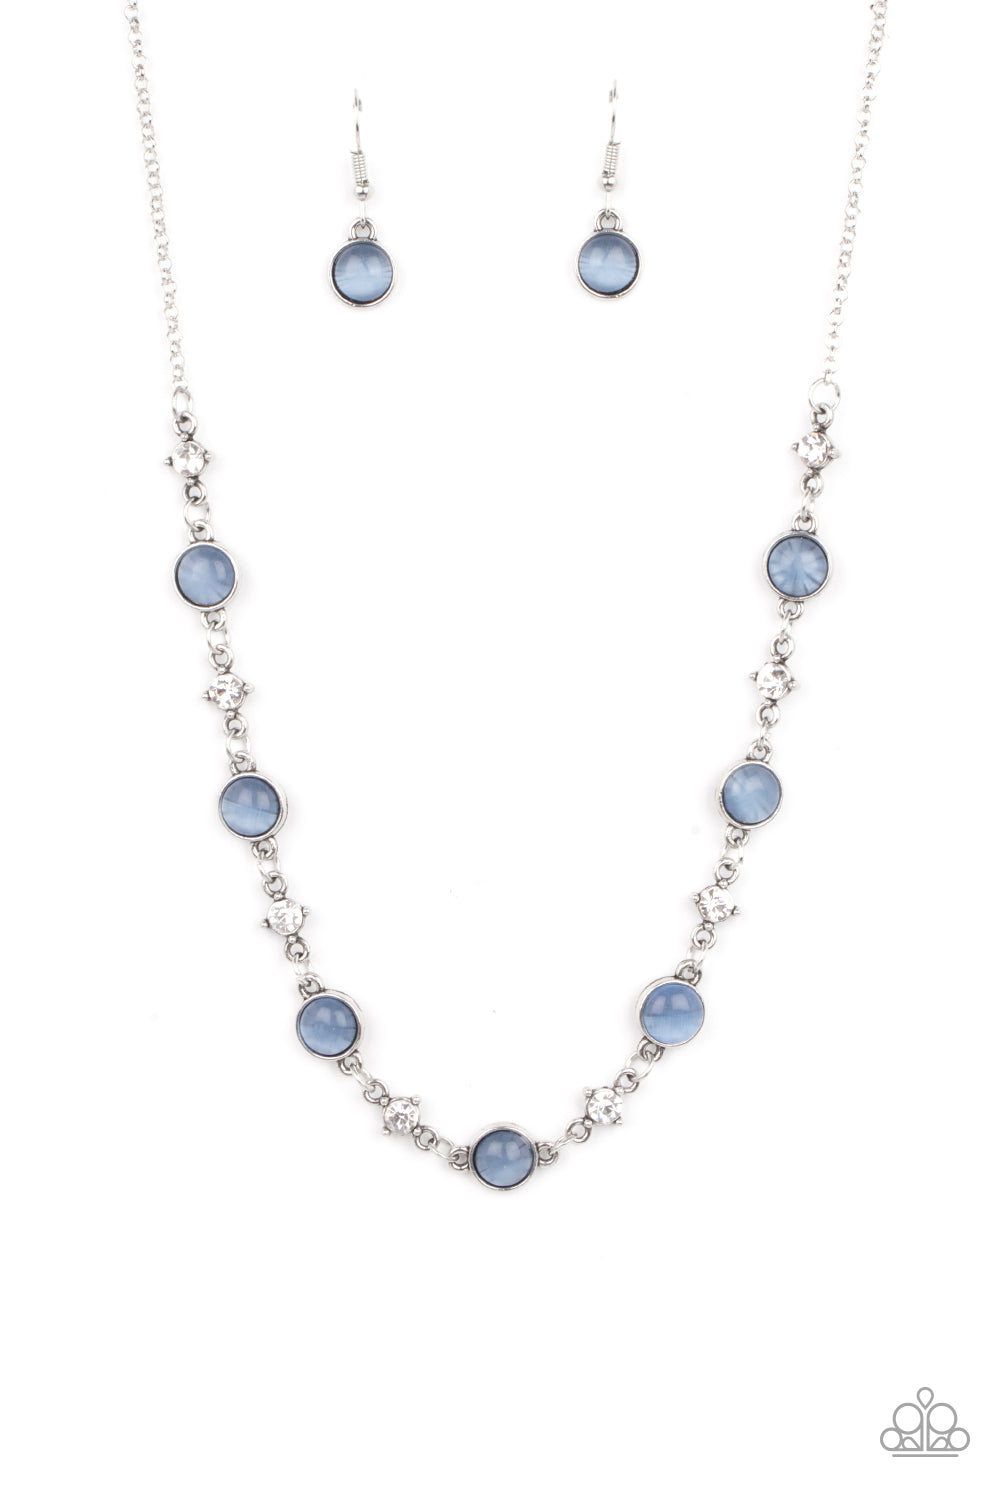 Inner Illumination - Blue necklace plus matching Use Your Illumination - Blue bracelet 2215